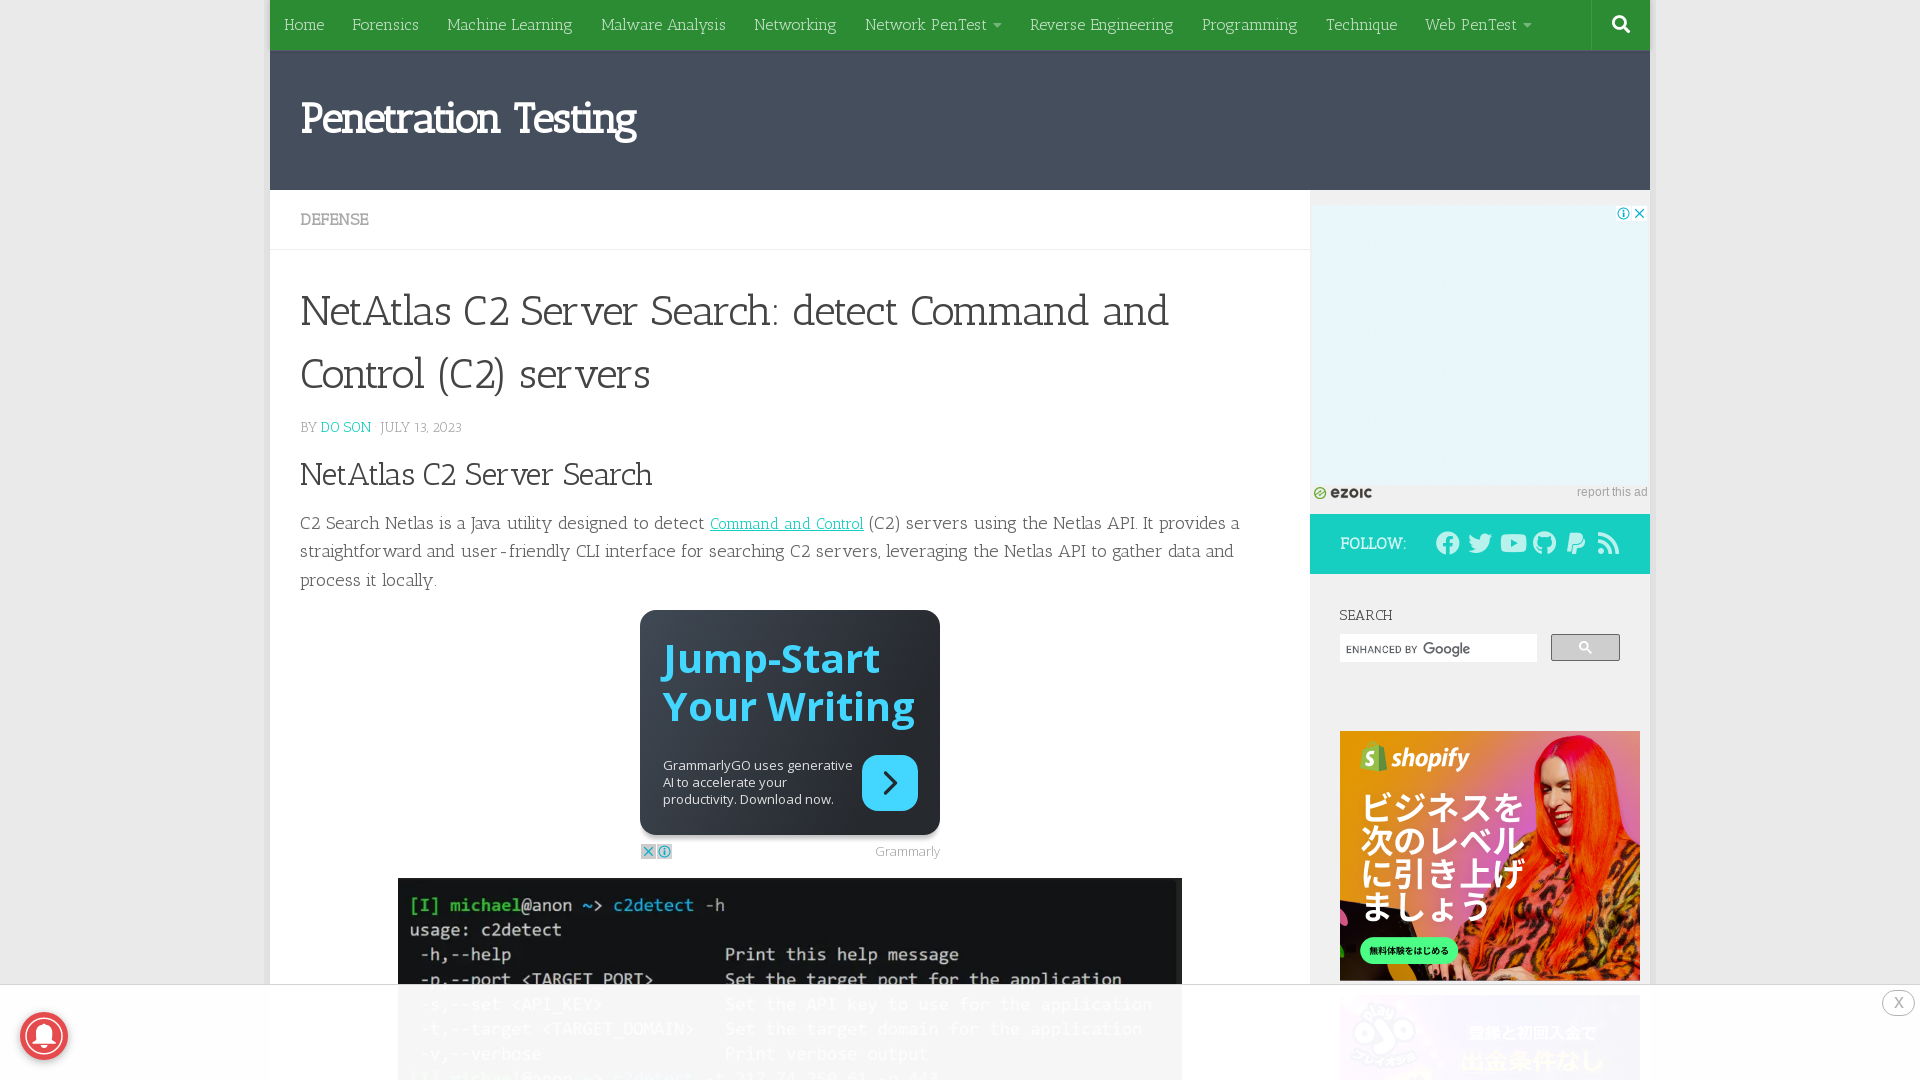 NetAtlas C2 Server Search: detect Command and Control (C2) servers